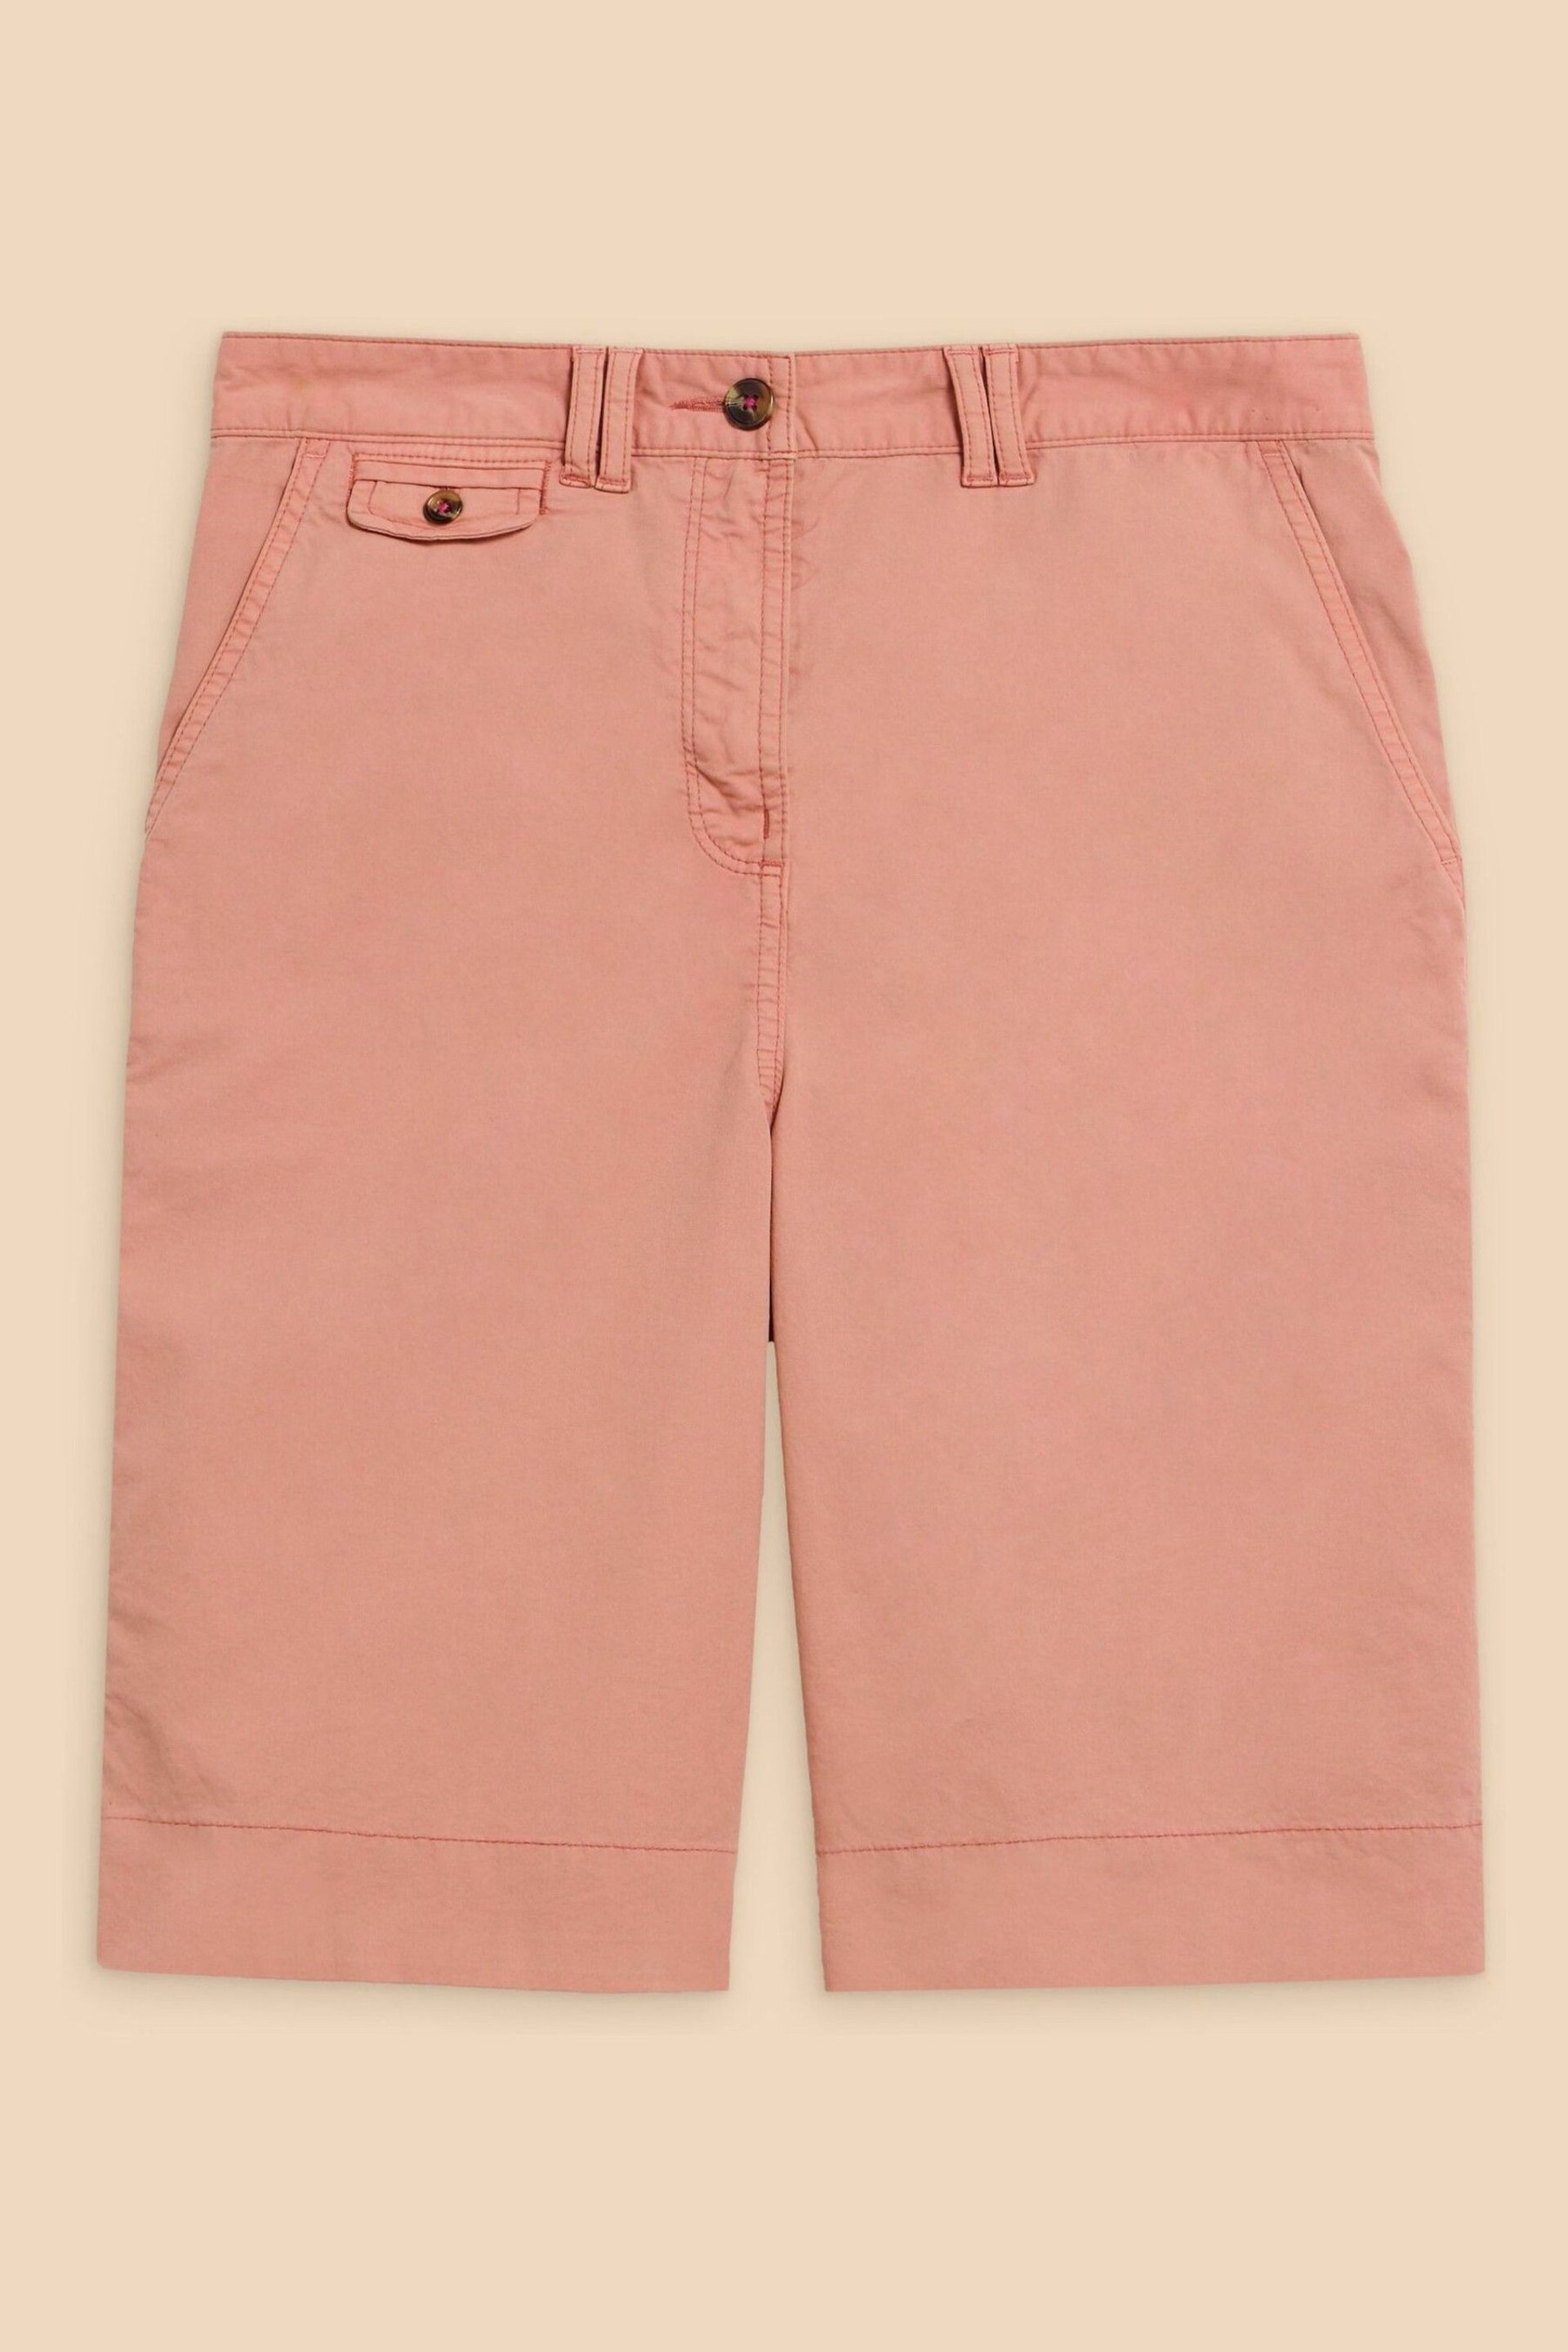 White Stuff Pink Hayley Organic Chino Shorts - Image 4 of 6